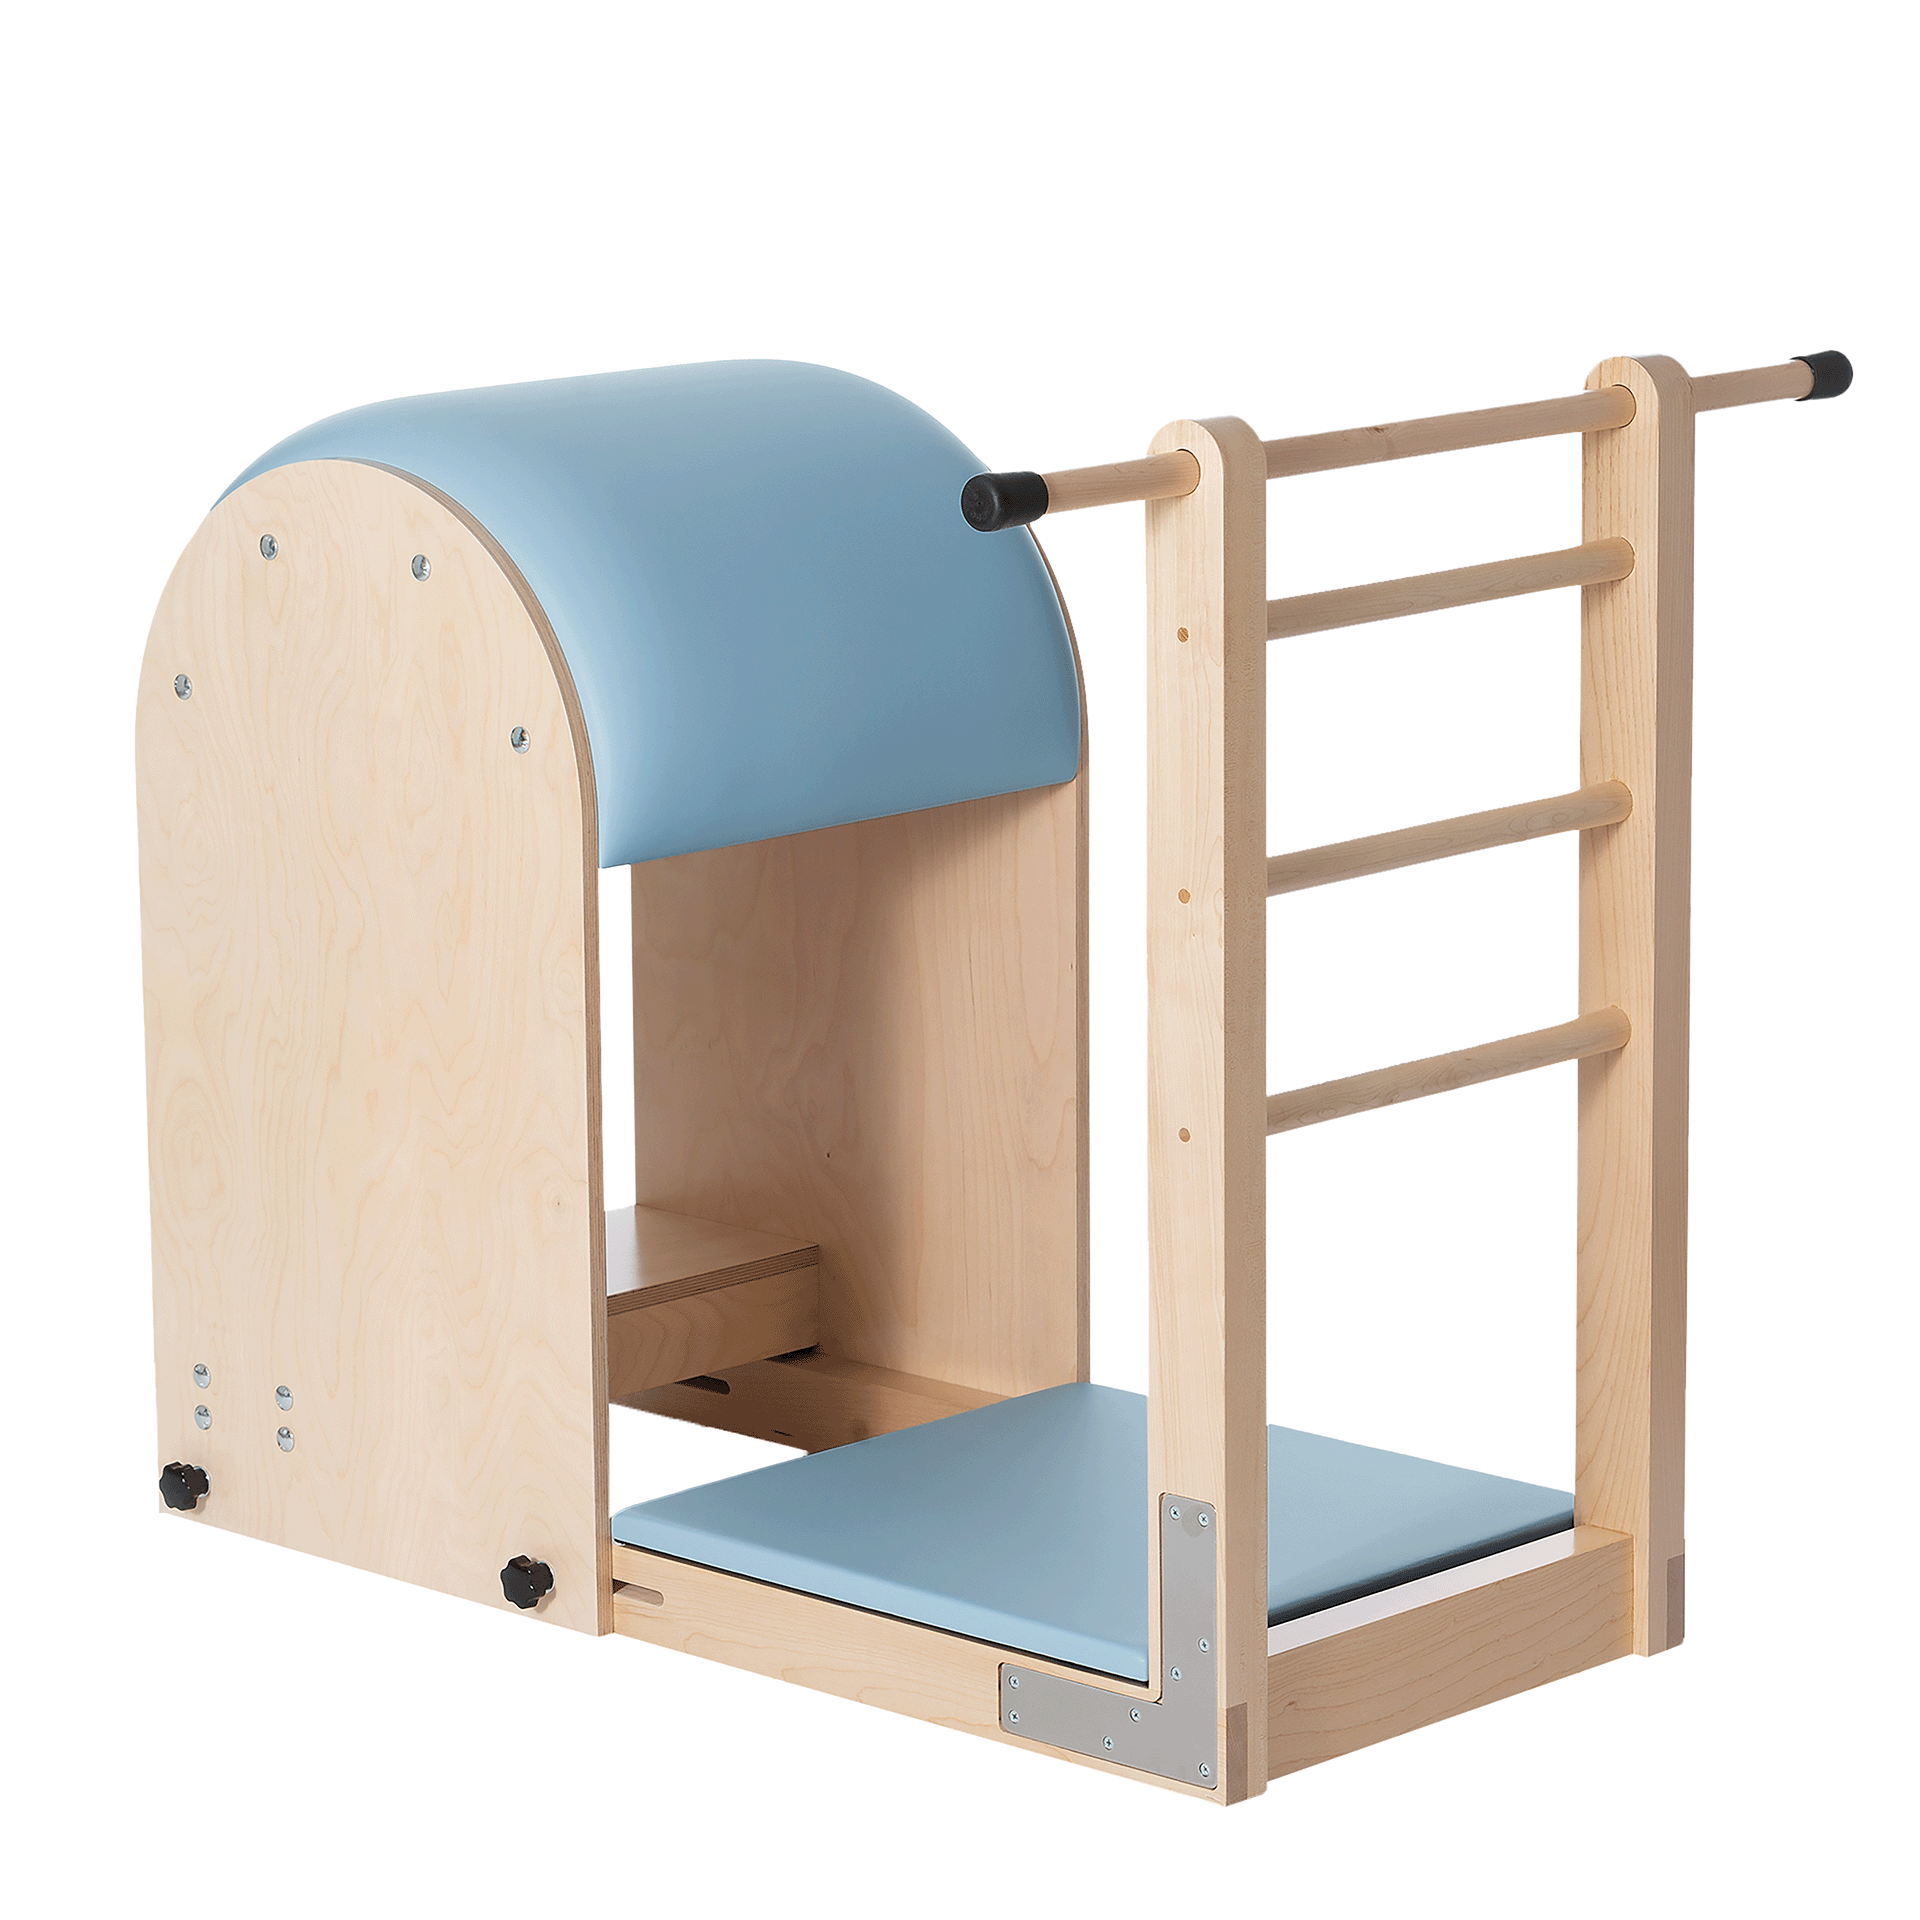 Ladder Barrel Classic - Aparelho de Pilates Arktus, HS Med